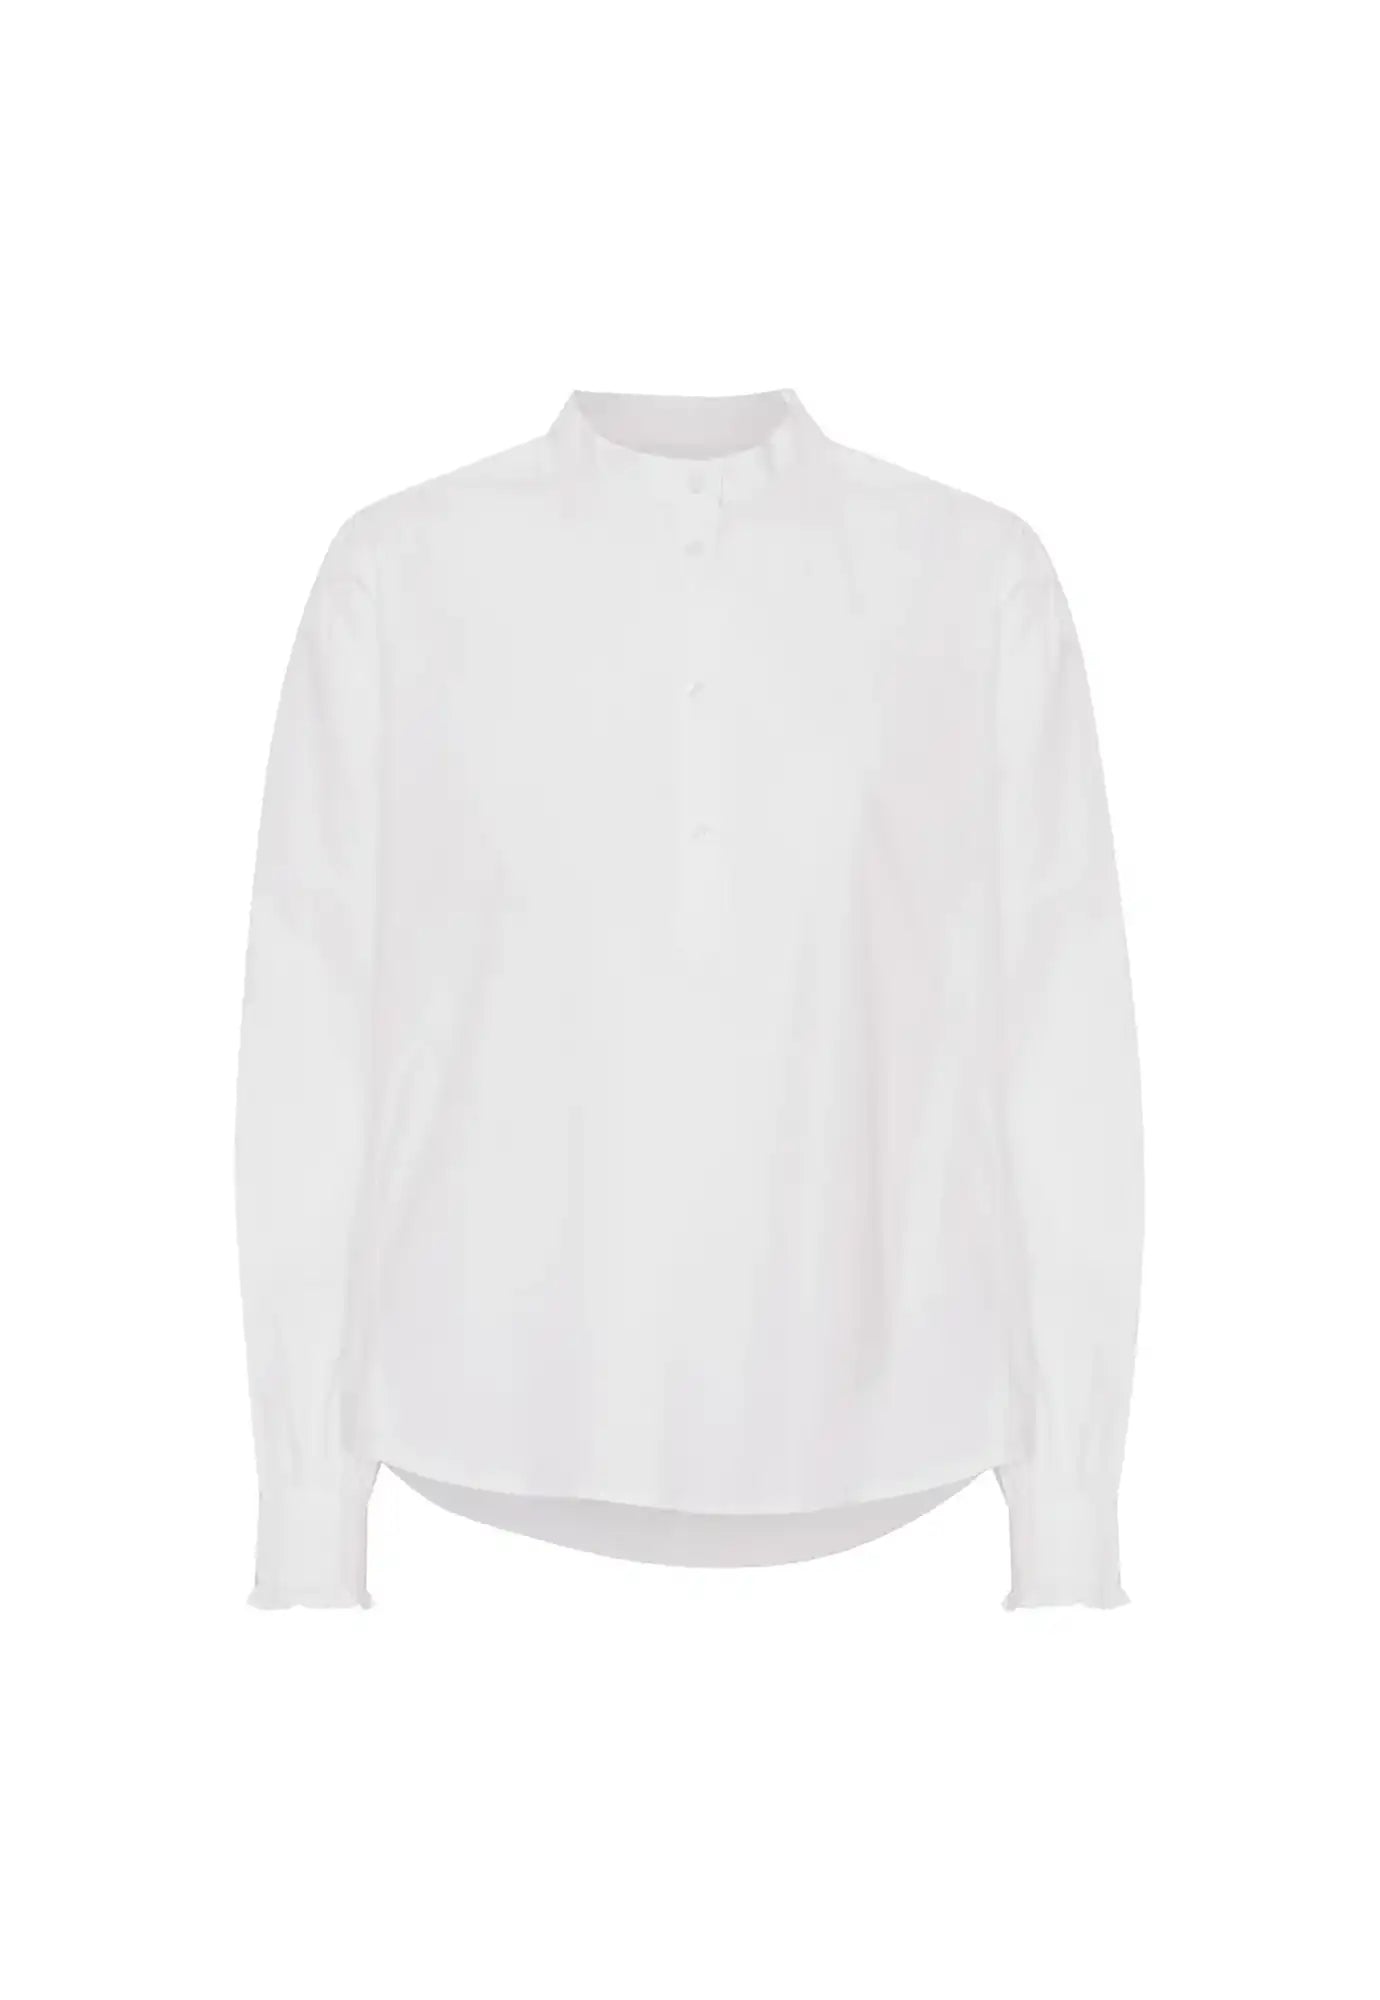 project aj117 - hedwig shirt - white